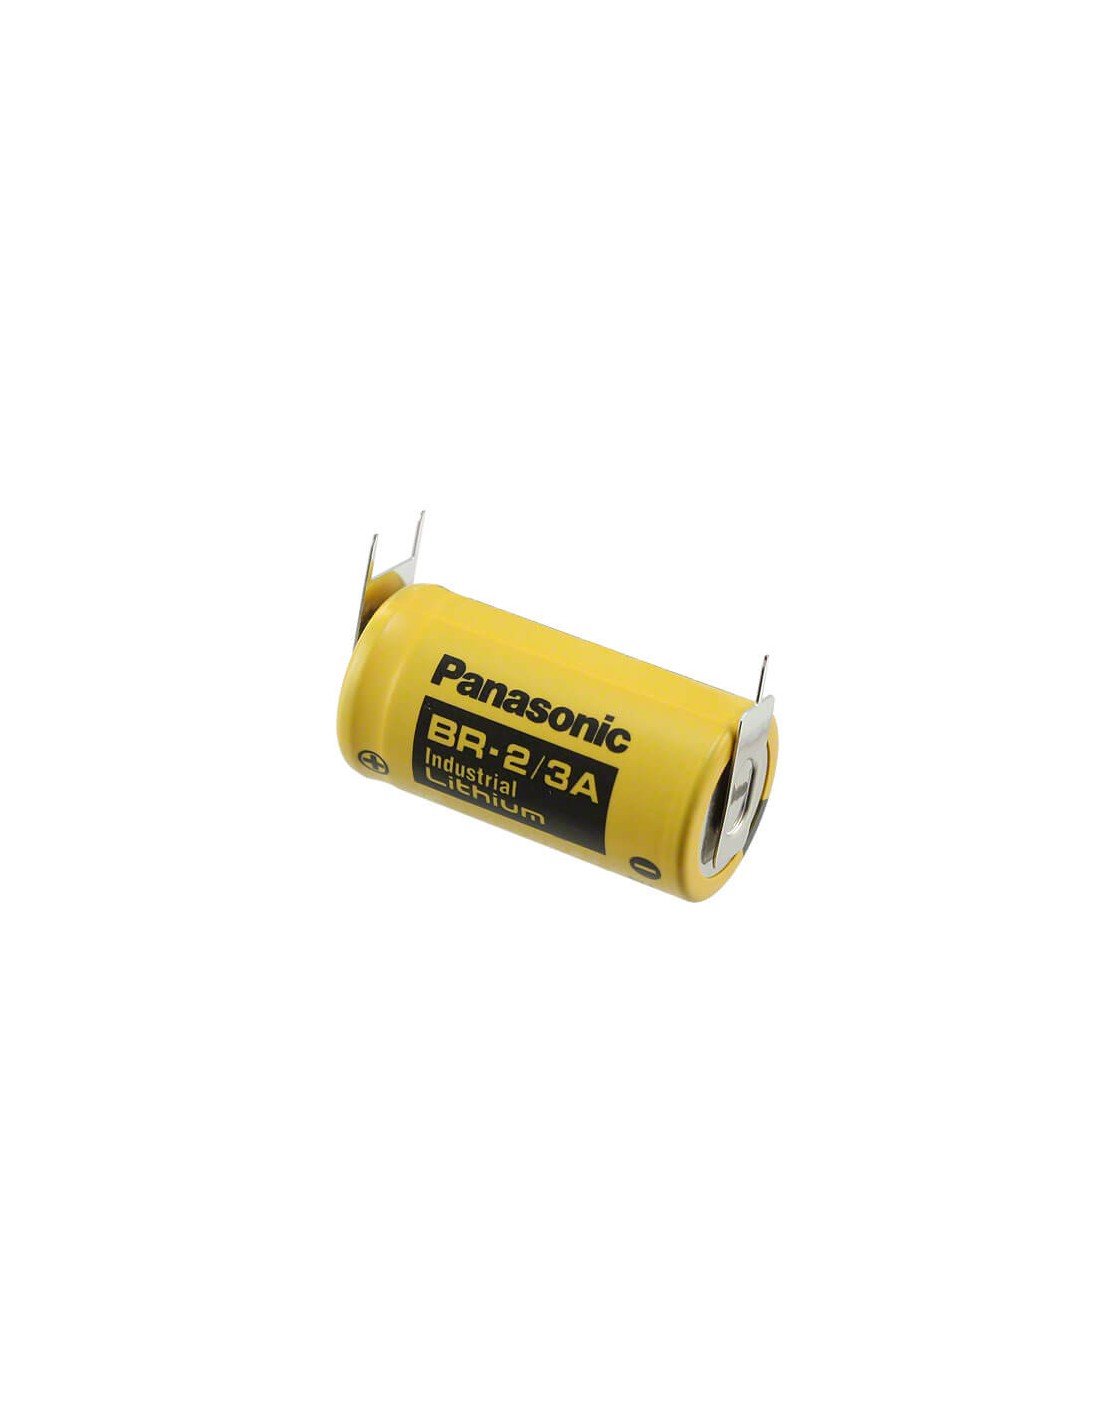 Battery Model Panasonic Br2/3a, 118-4184, 2587678-8008, 6135-01-159-9705 3V, 1200 mAh - 3.6Wh